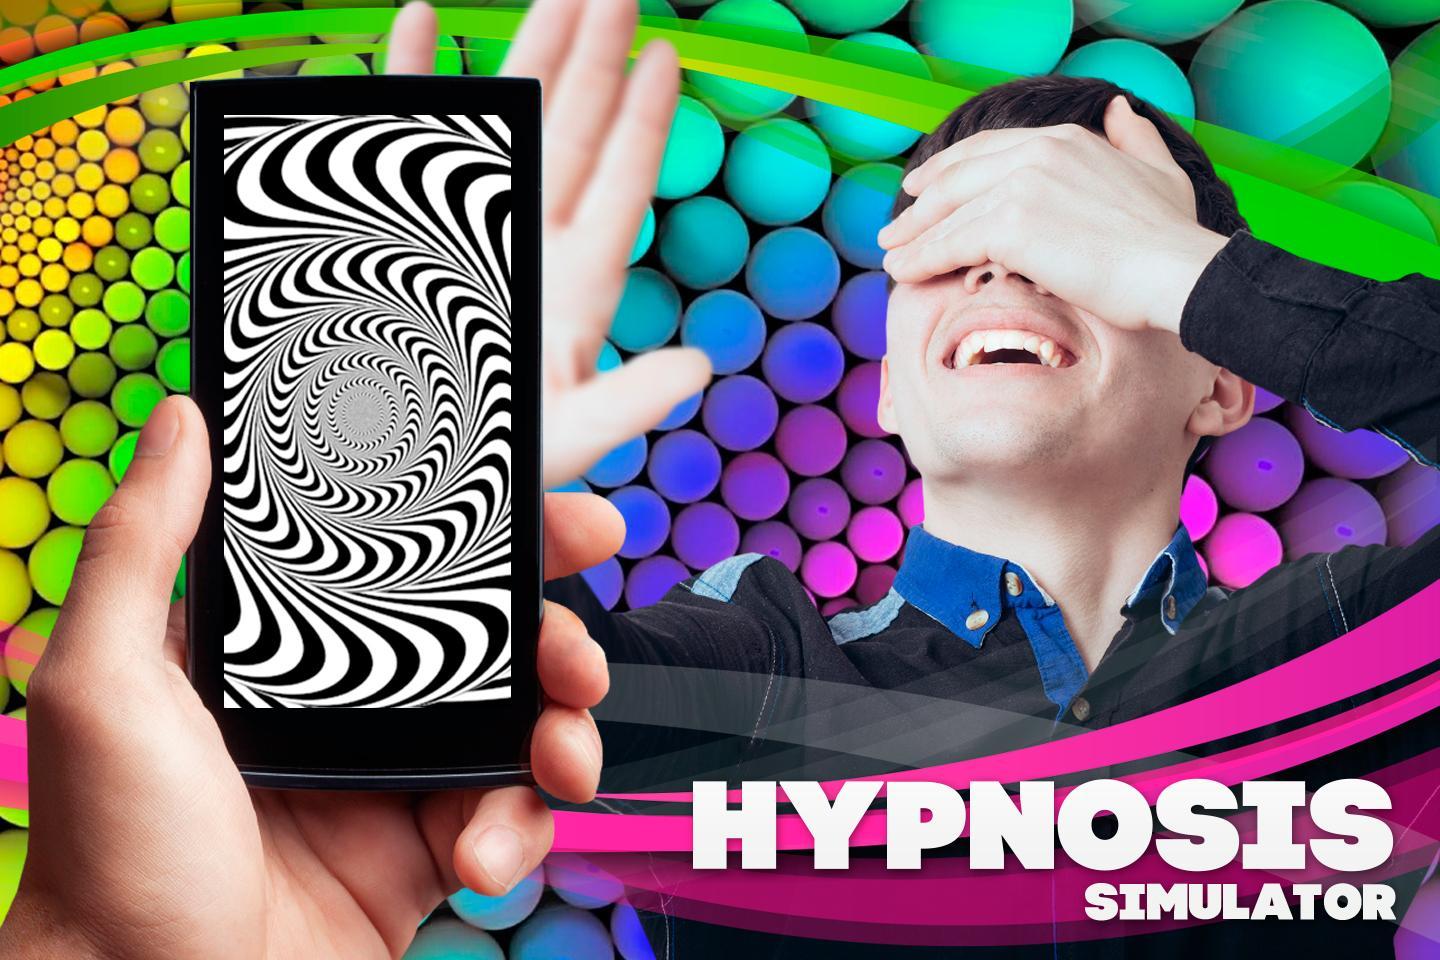 Hypnosis videos. Гипноз в рекламе. Постер "гипноз". Иллюзия симуляция. Симулятор гипноза игра.